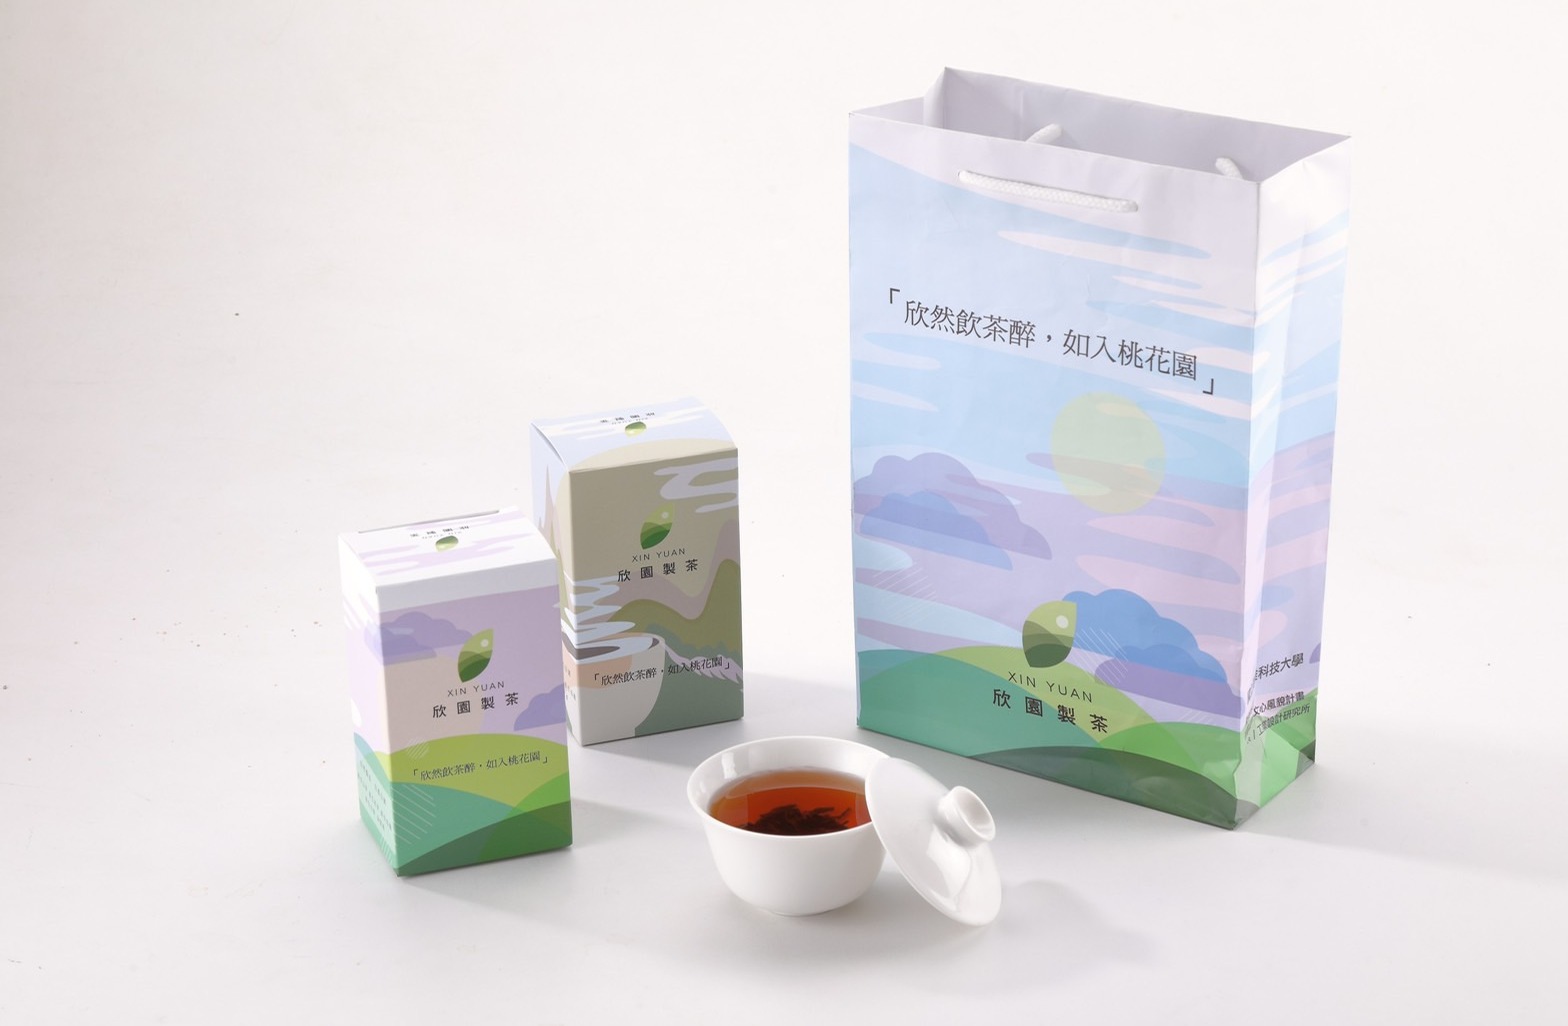 Xin Yuan Tea Factory - native mountain tea, black tea